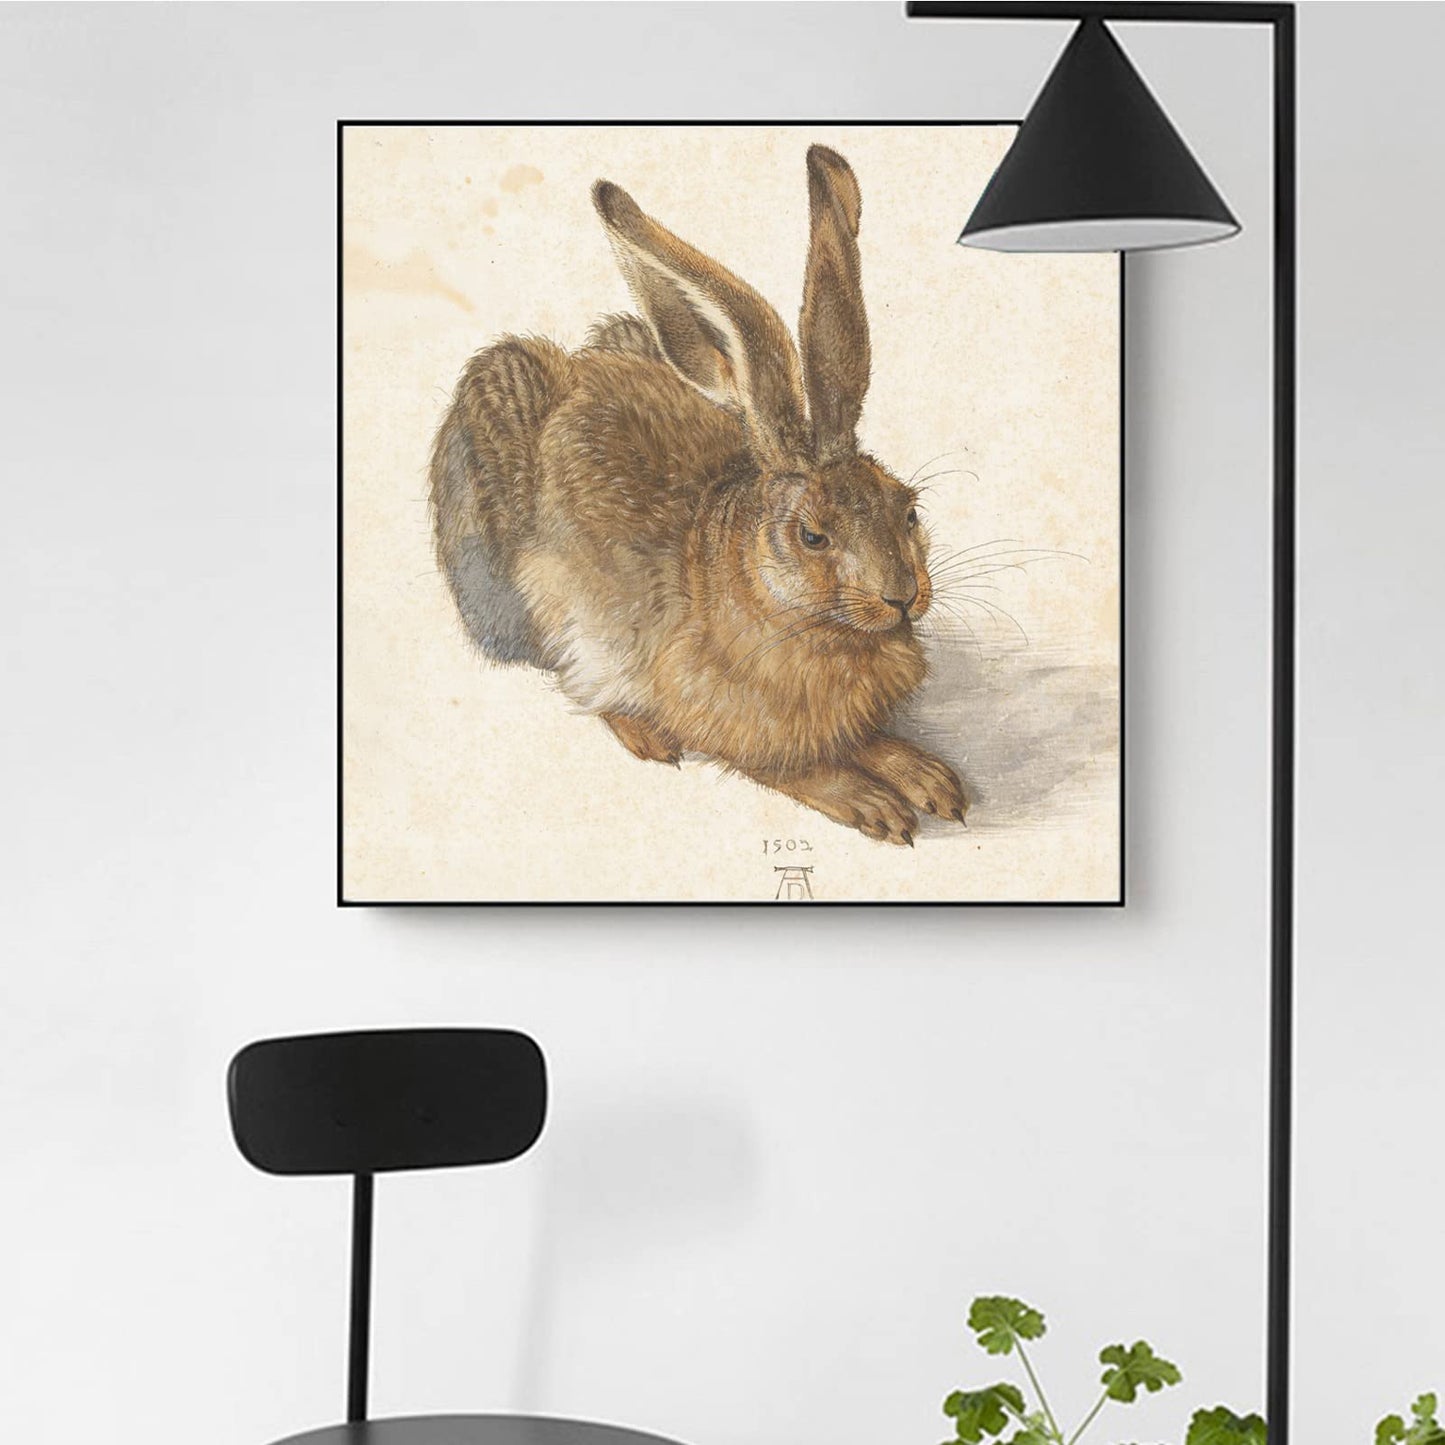 KWAY Albrecht Durer Art Print Poster - Young Hare - Fine Artwork Canvas Wall Art Decor - Unframed Rabbit Picture - Contemporary Home Decor 8x8in/20x20cm